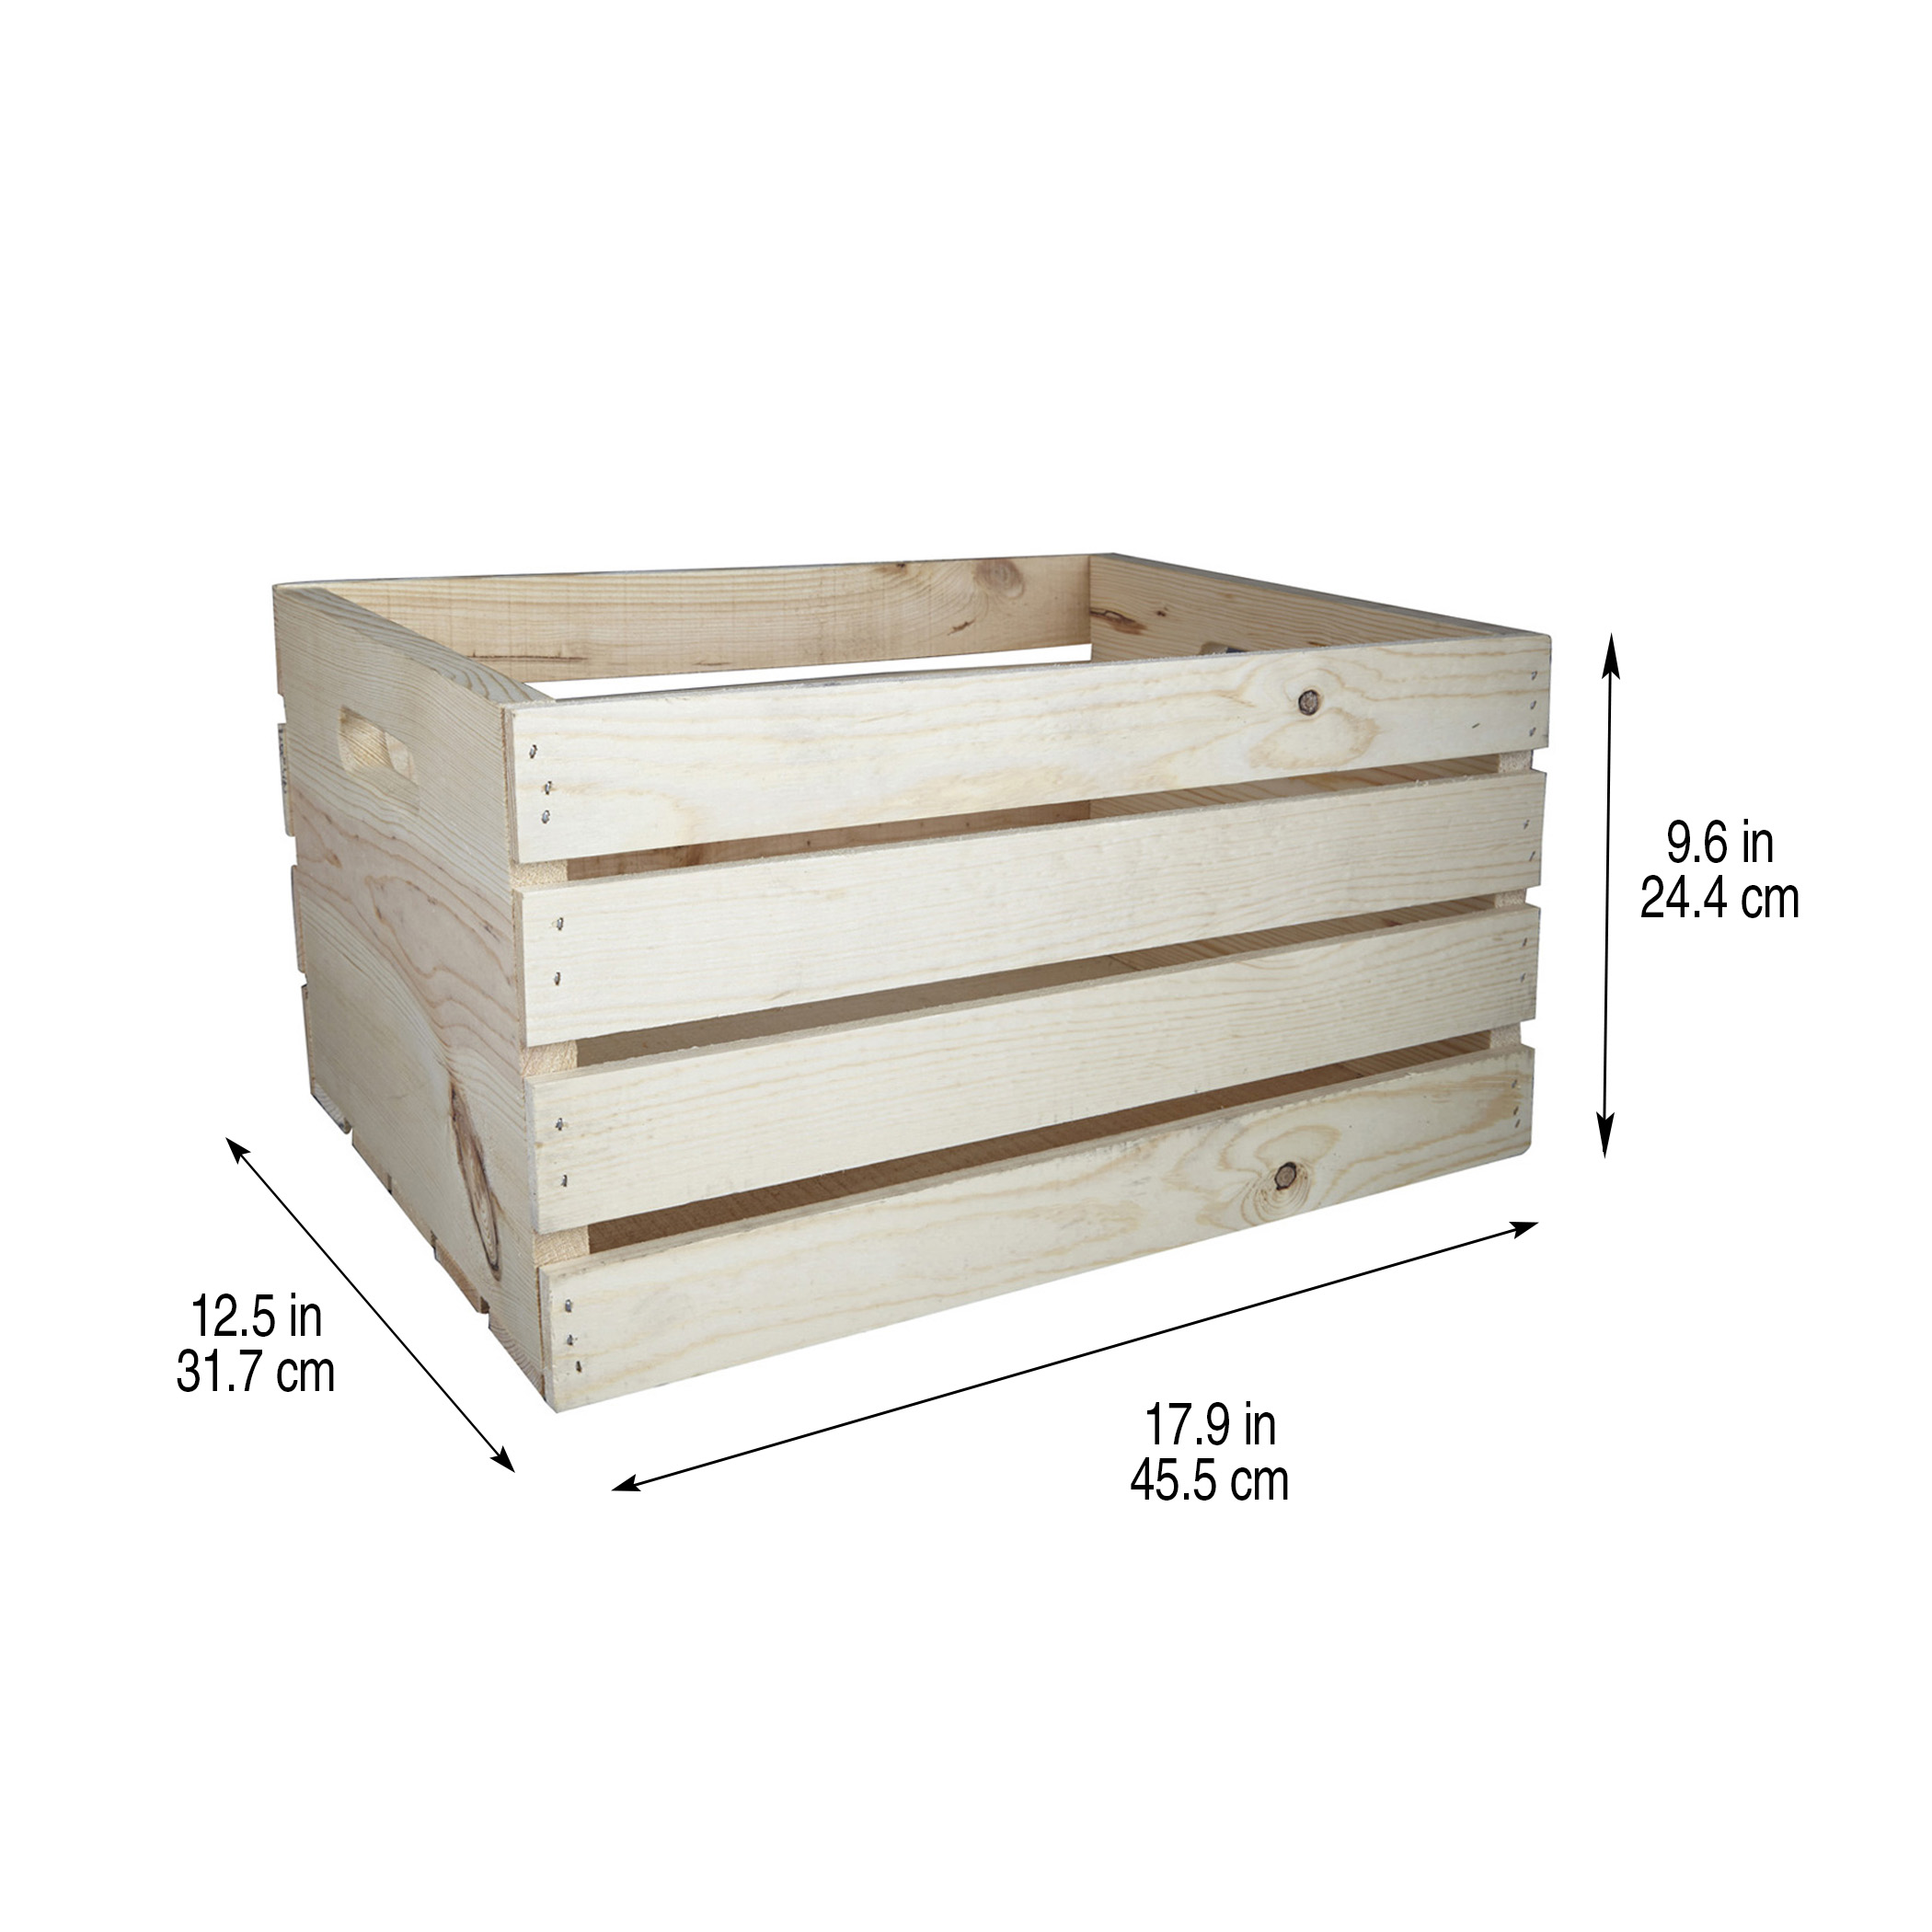 Wooden Crates 12ct- Produce Display - Wood Display